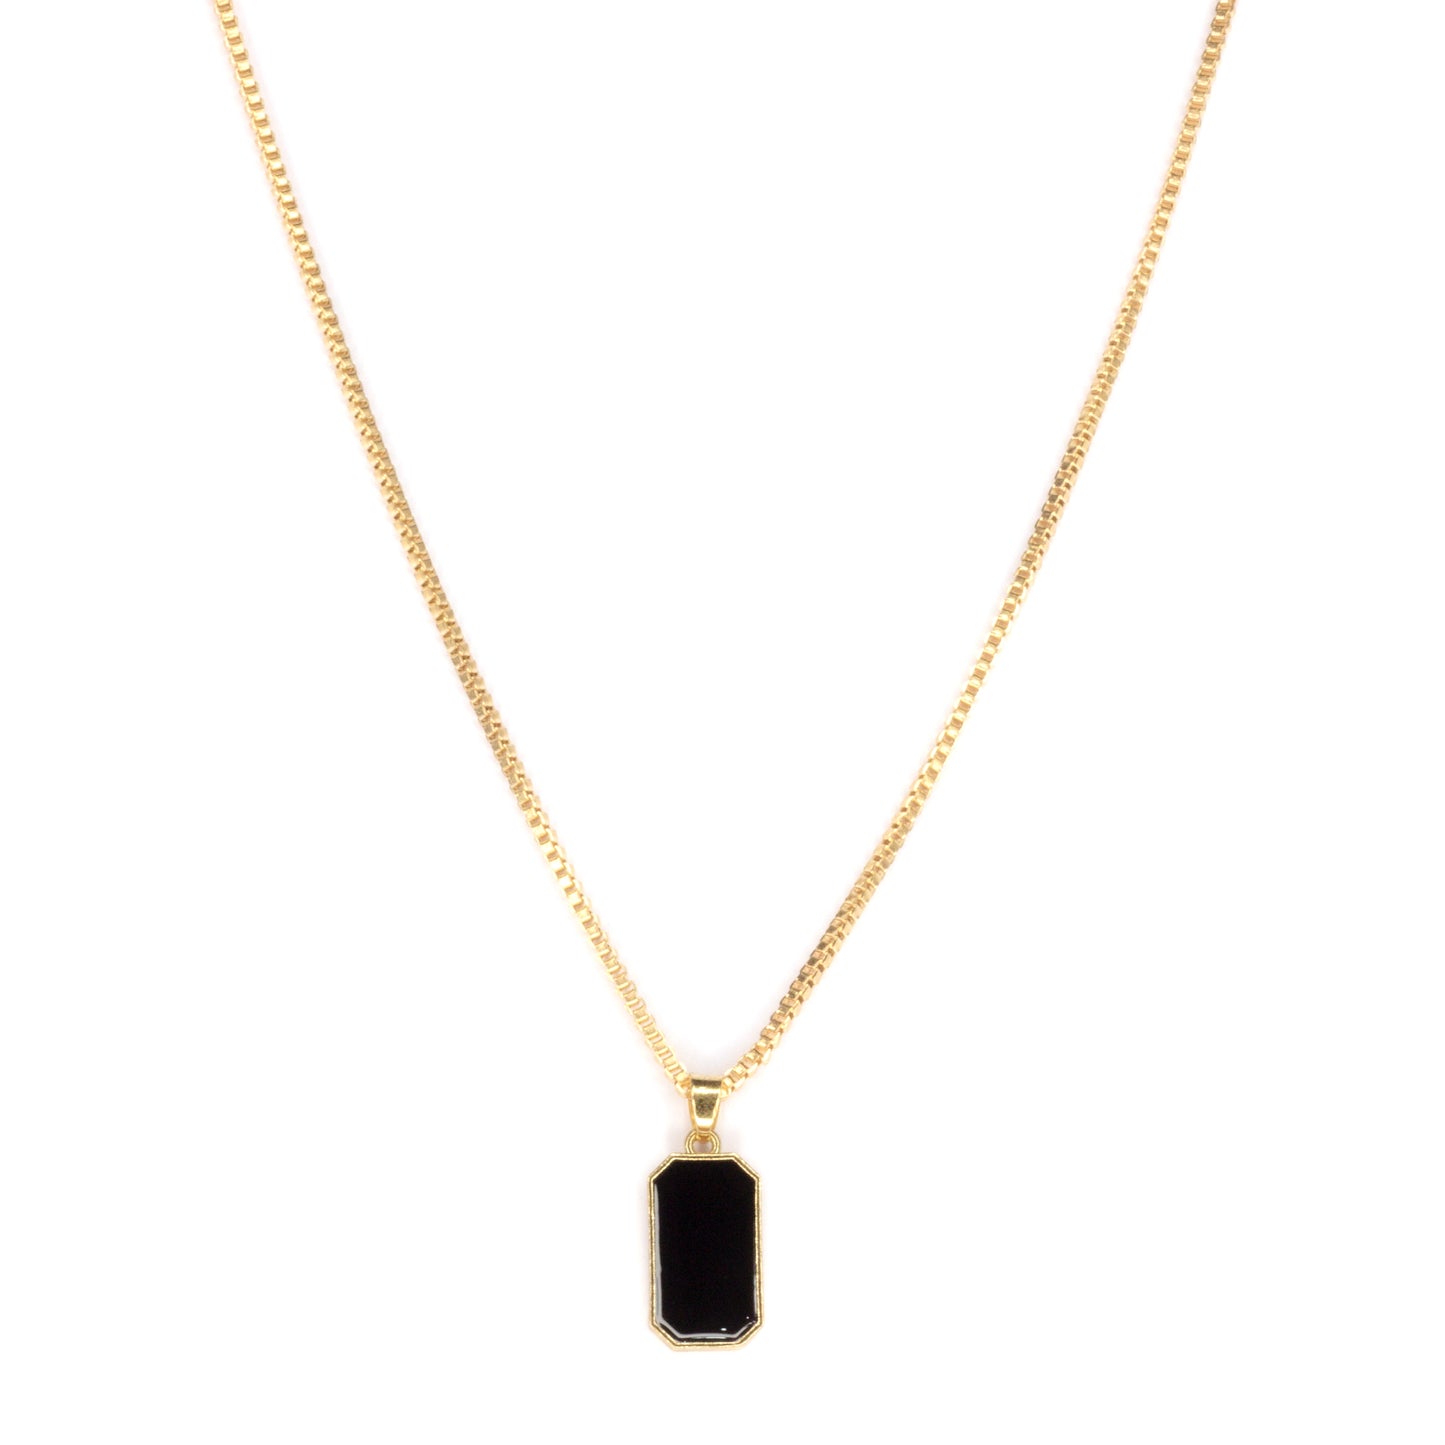 Black Stone necklace